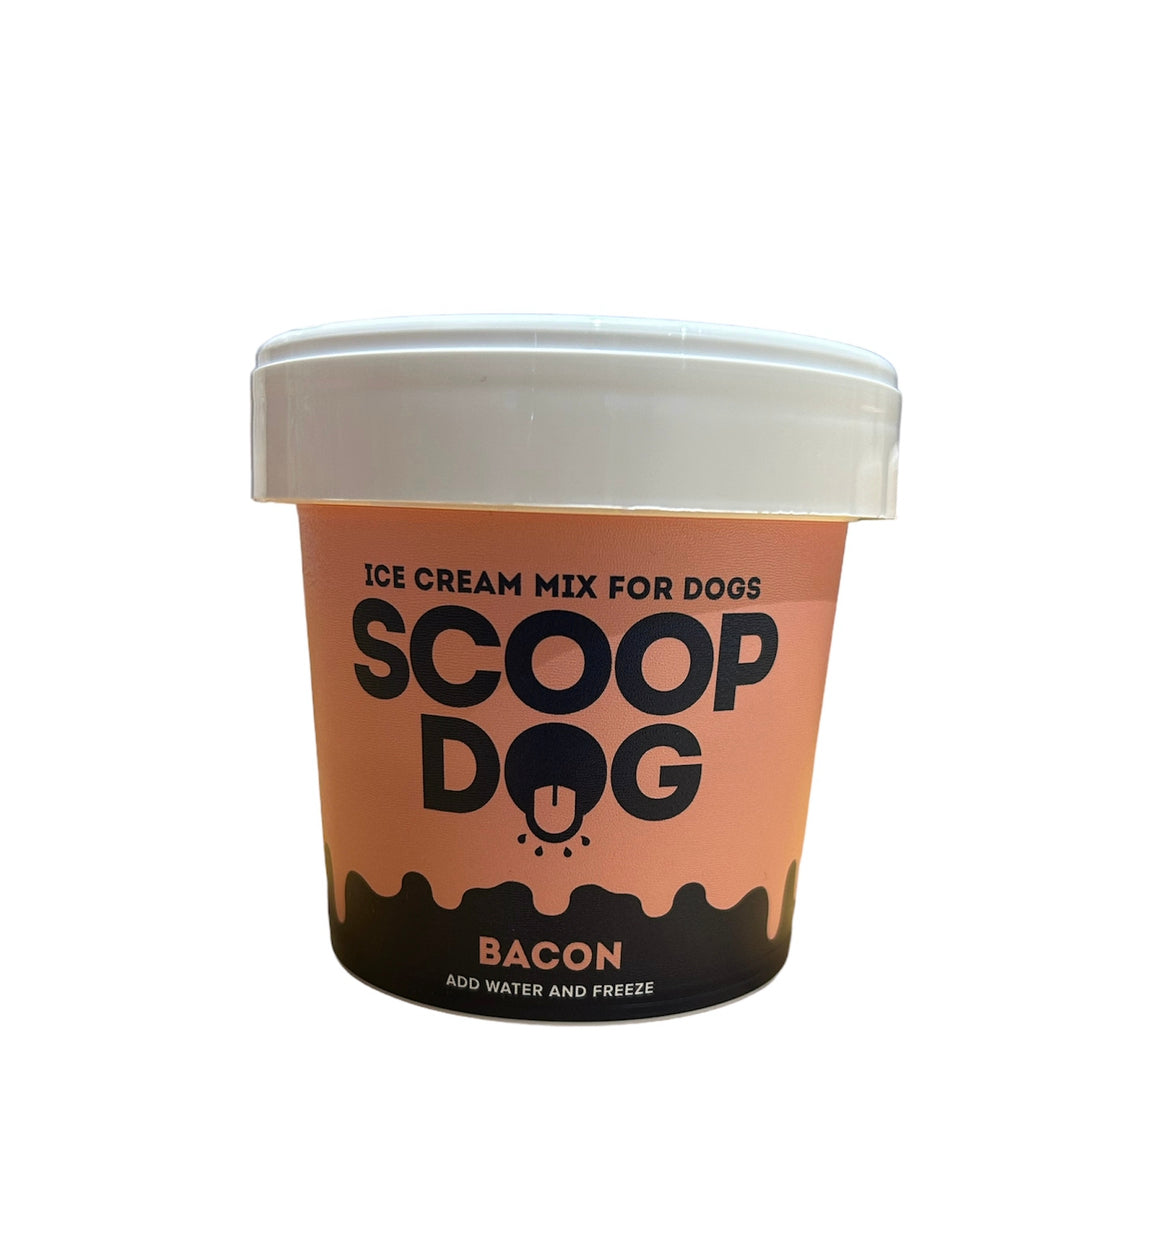 Scoop Dog, ice cream, dog treat 